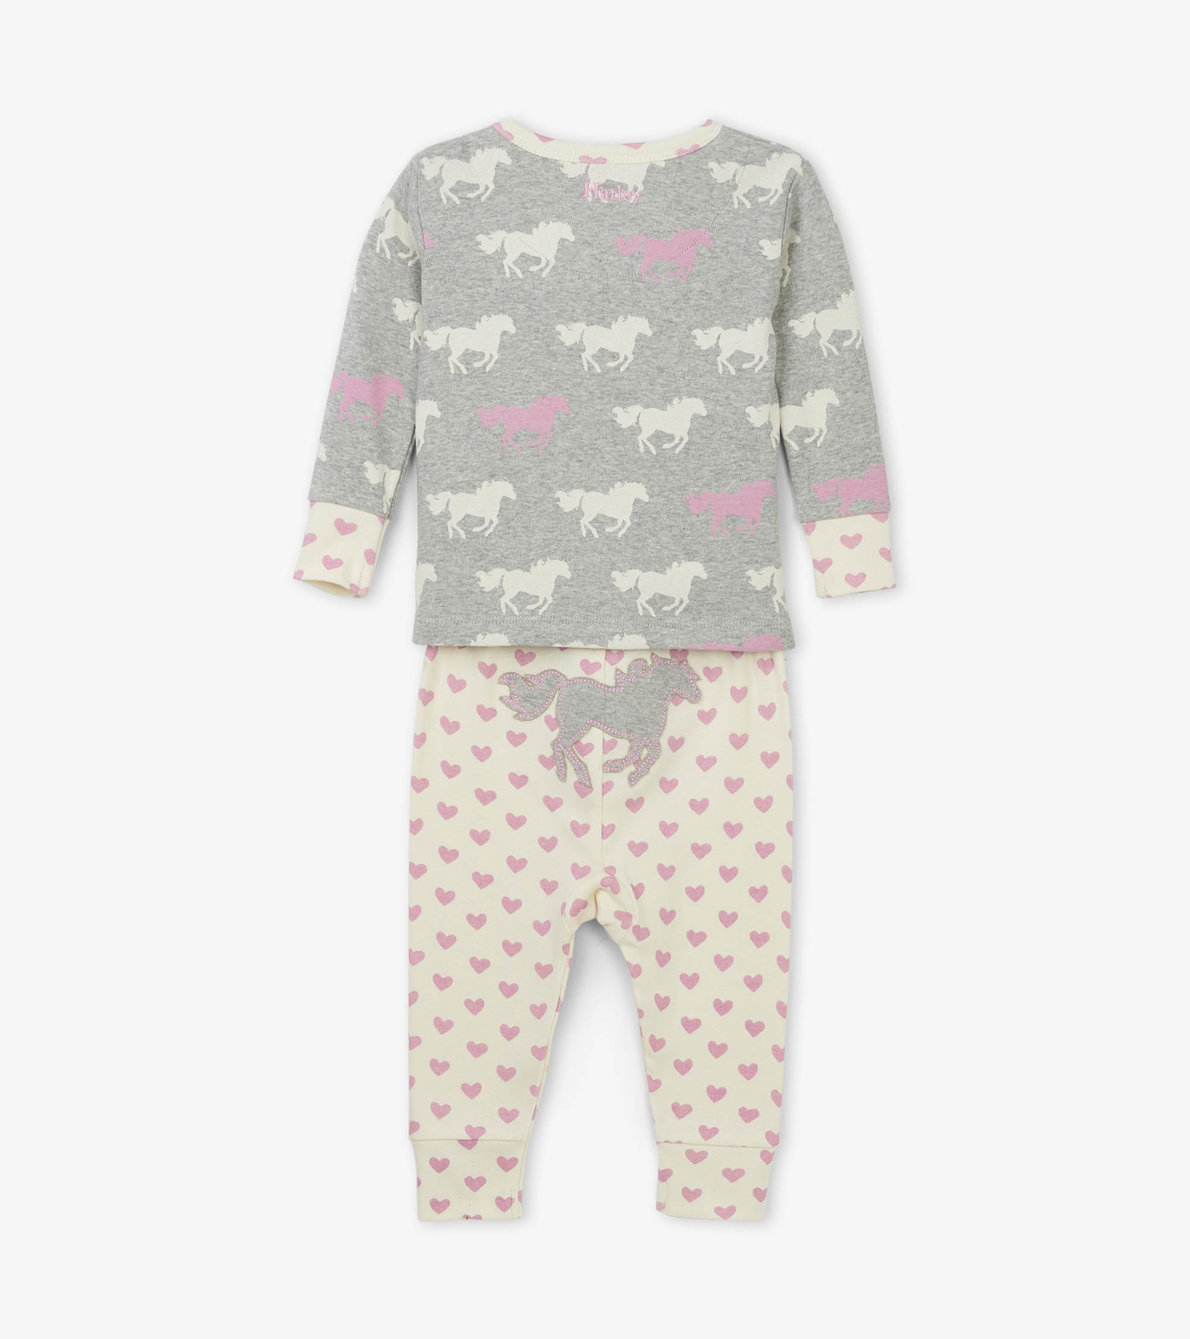 View larger image of Pasture Horses Baby Pajama Set